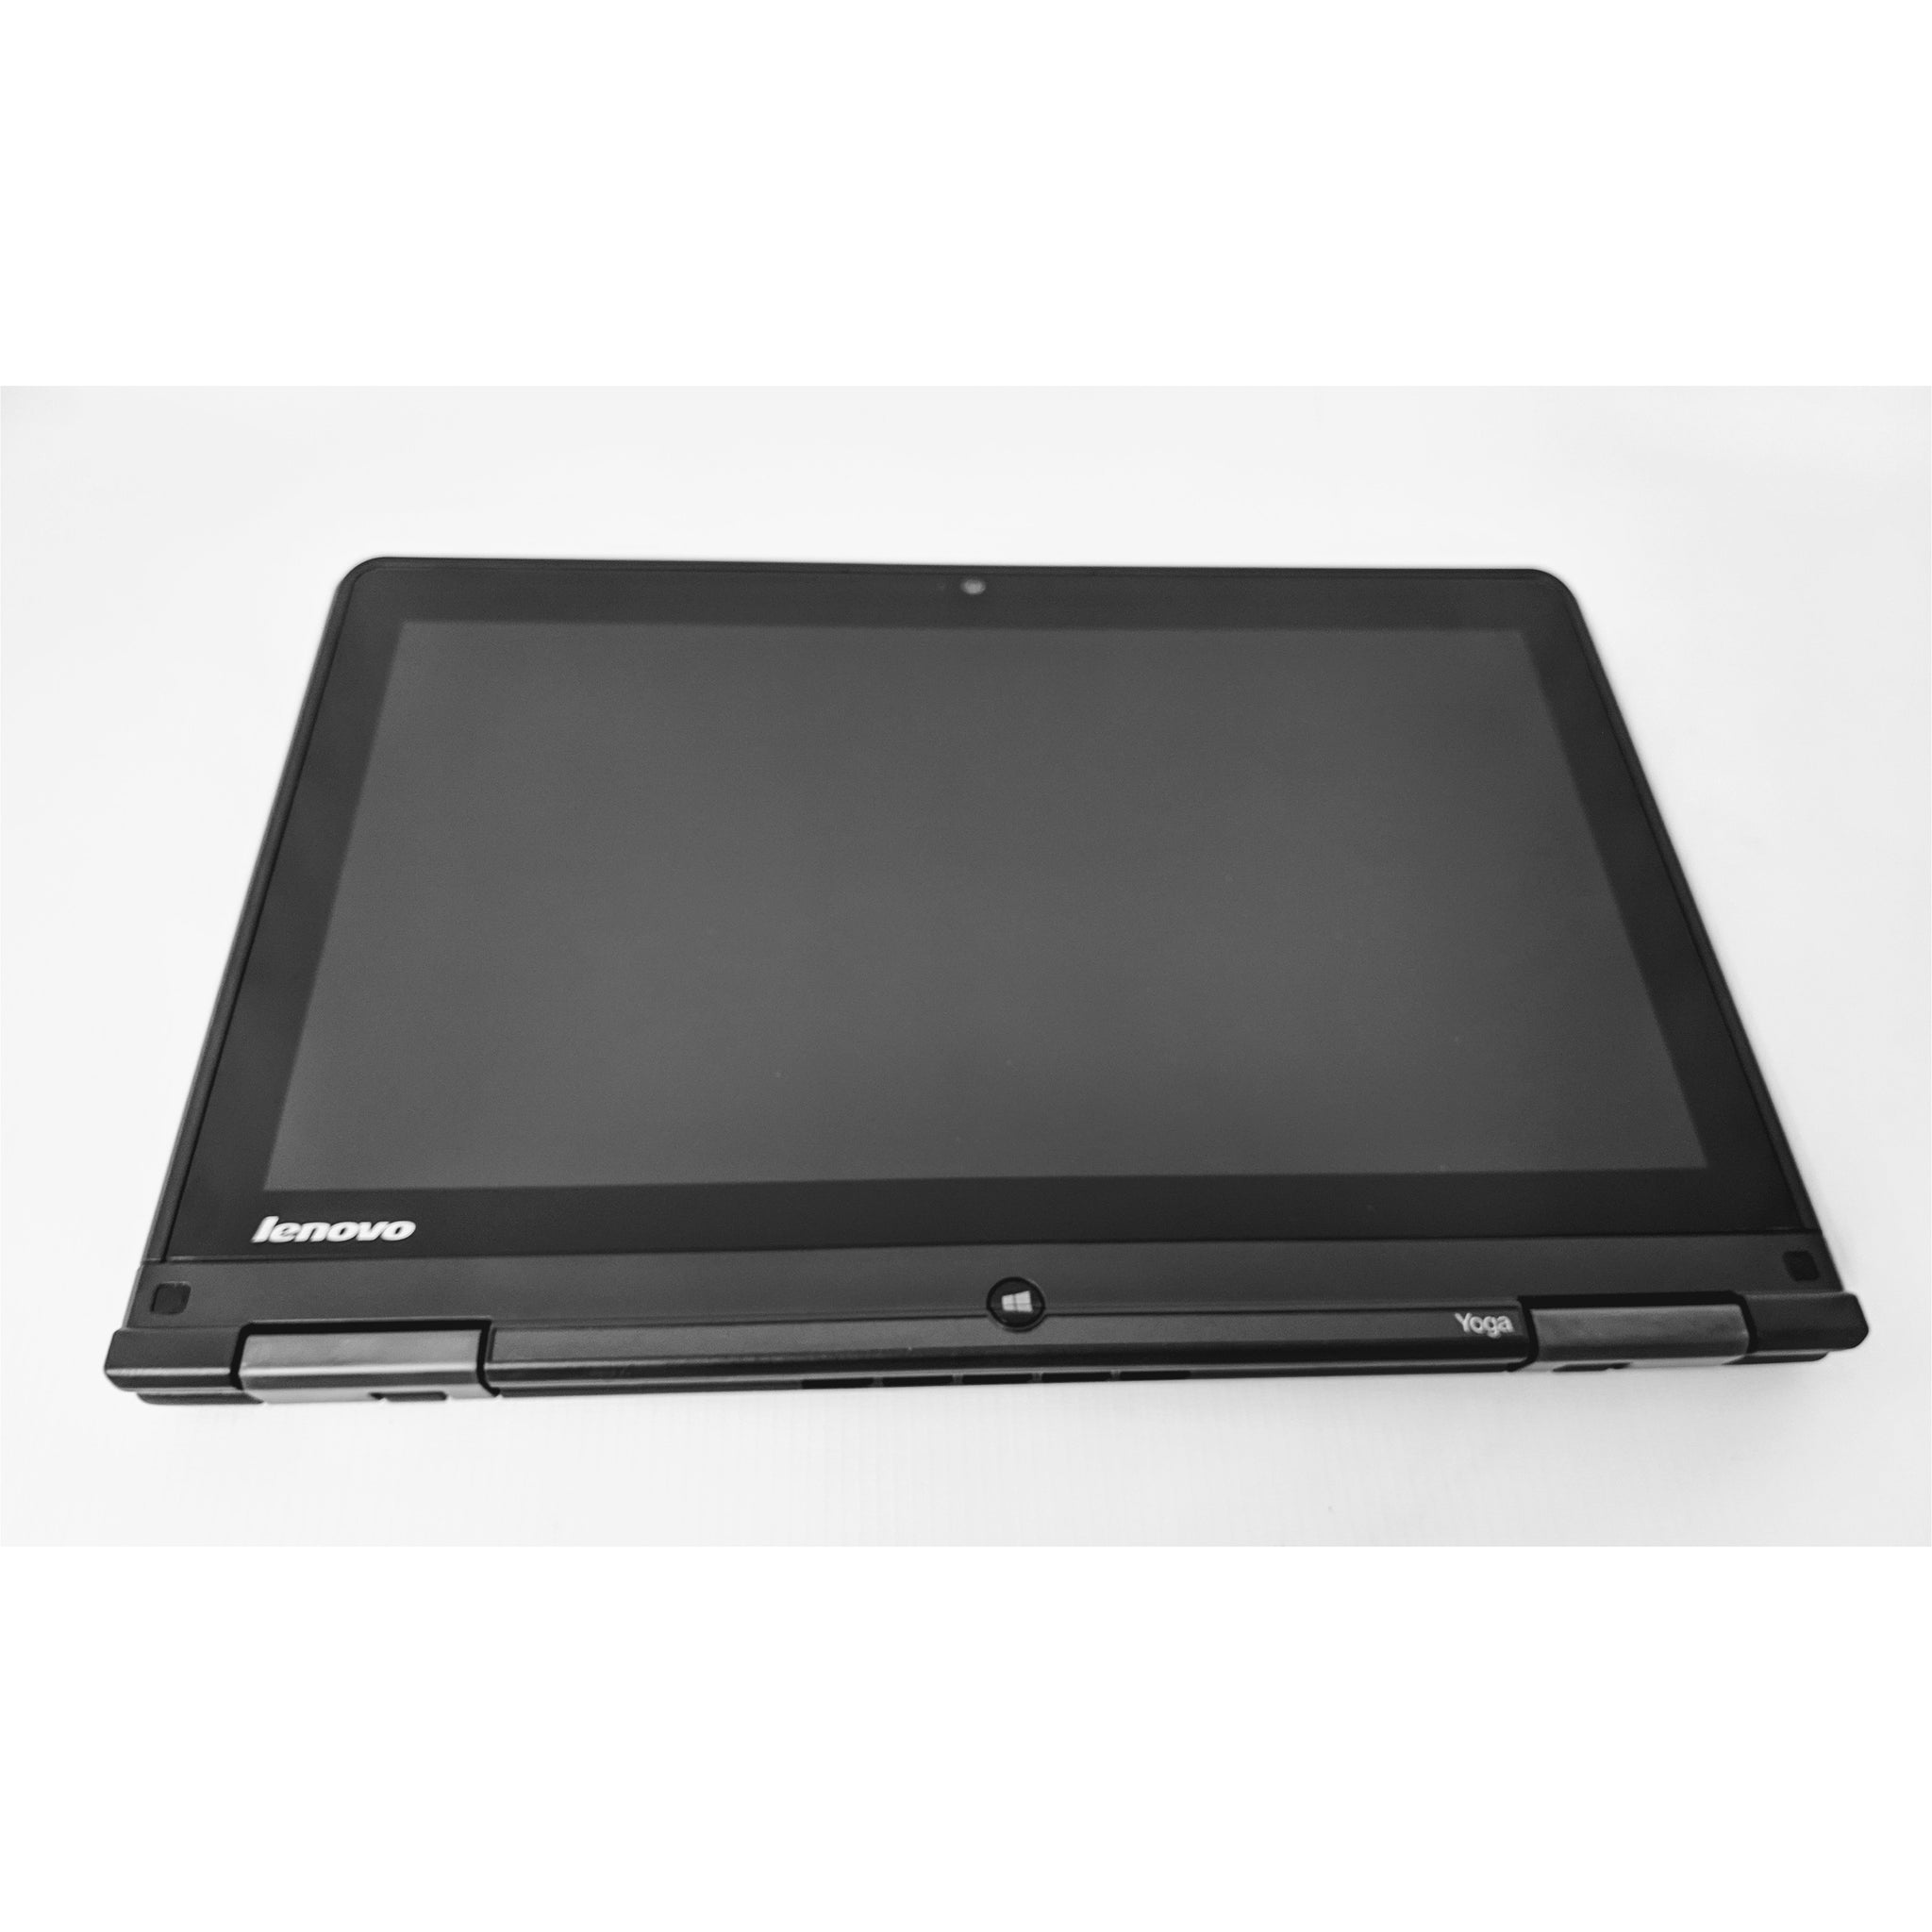 Lenovo Thinkpad Yoga S1 i7-4600U 3.3GHz Convertible Touchscreen Laptop 1080p Full HD